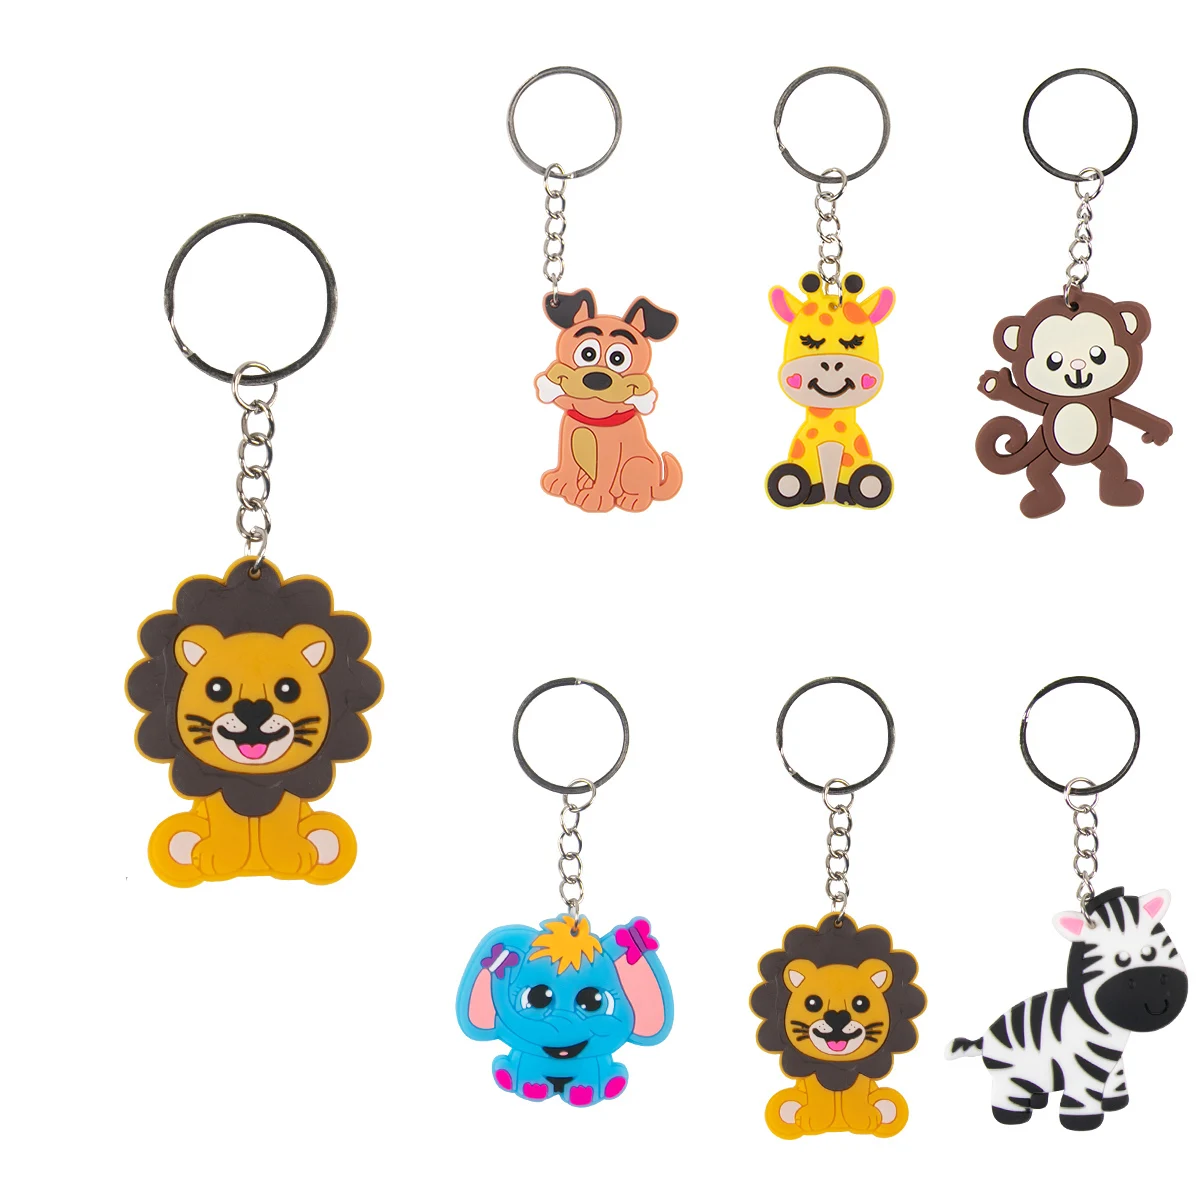 

6pcs Cartoon Jungle Animal Keychains Lion monkey cute Silicone Key Chains Safari Birthday Party Decor kids Gifts Baby Shower